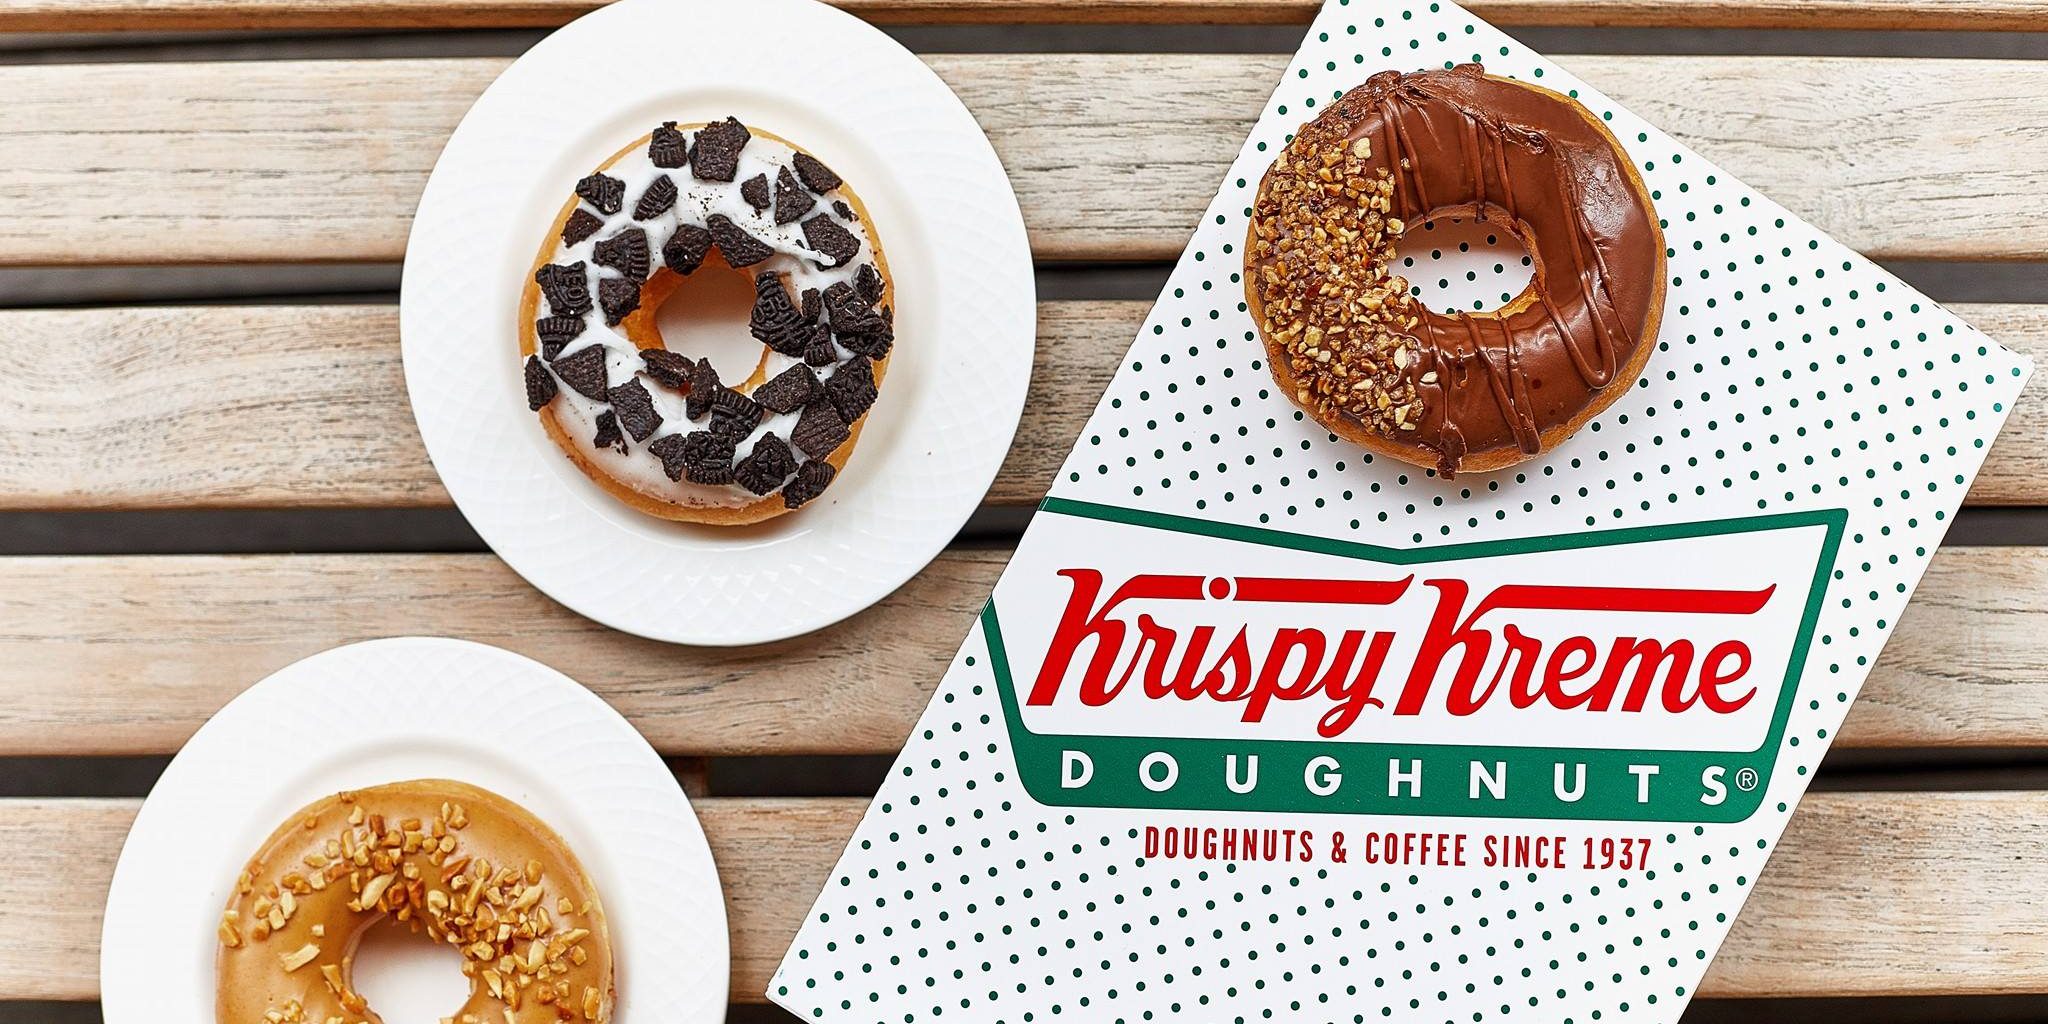 Krispy Kreme Singapore $15 Off Krispy Kreme Doughnuts Promotion ends 31 Mar 2017